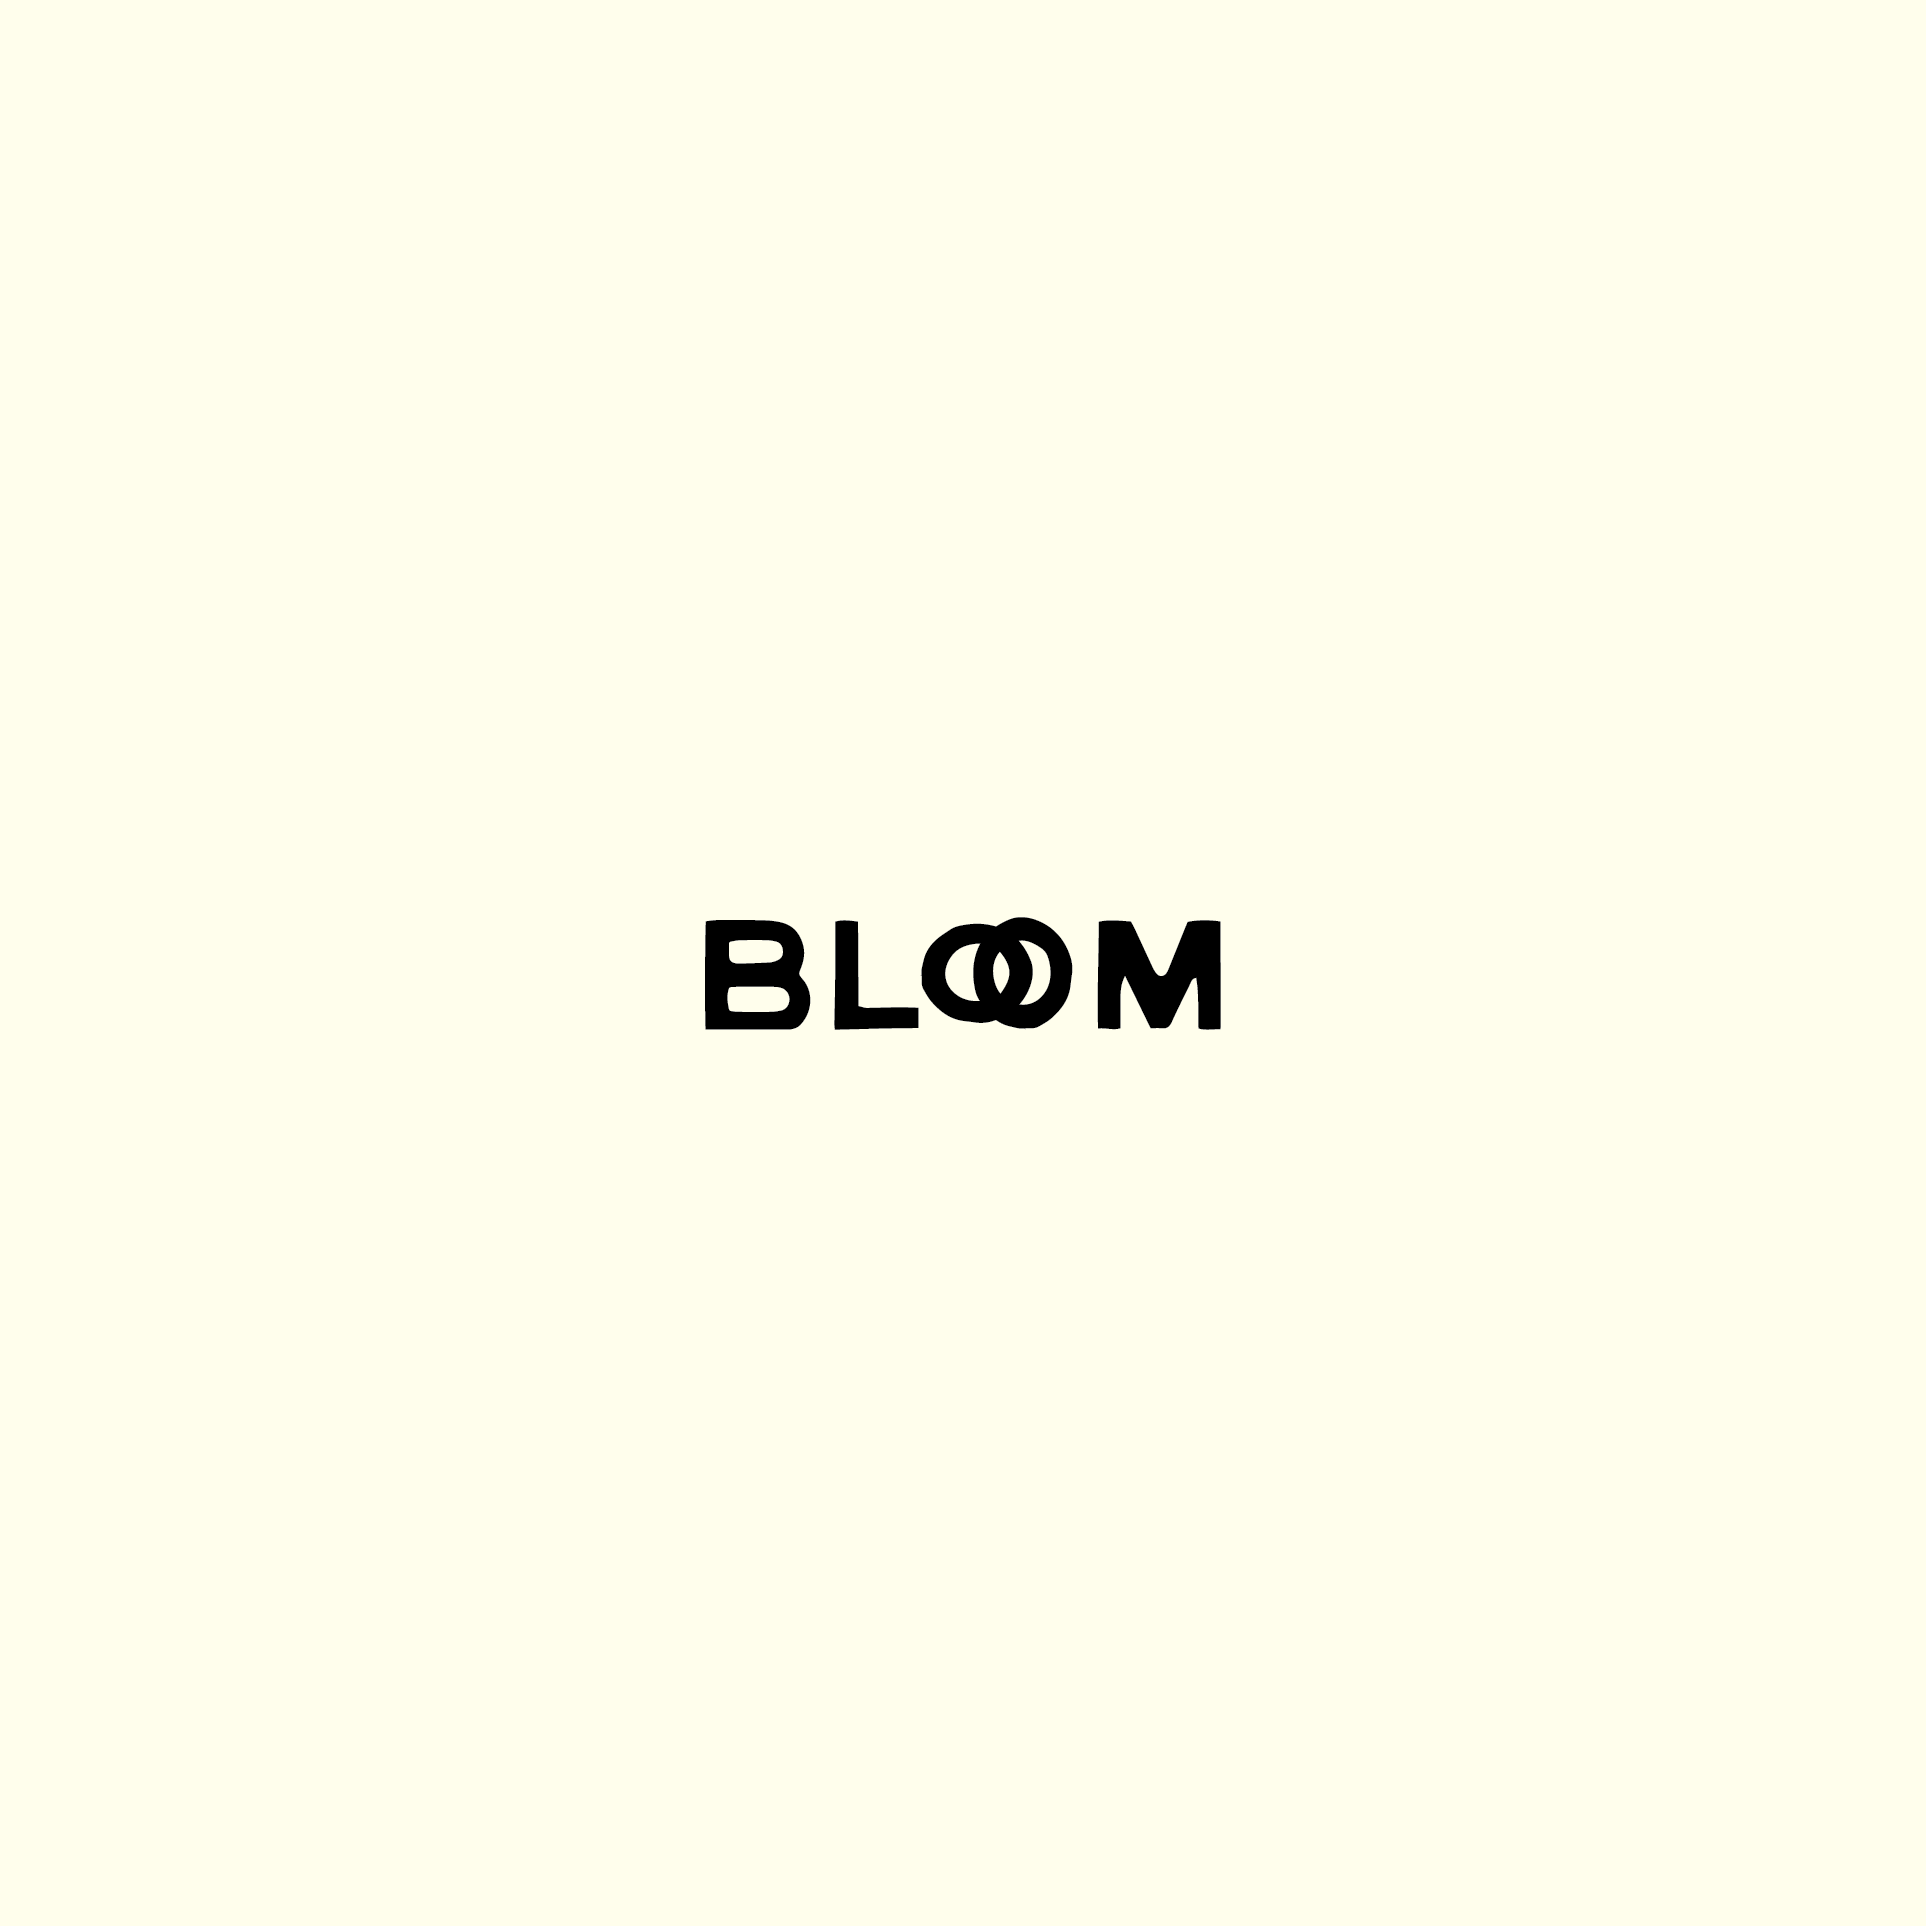 Bloom Logos - Free Bloom Logo Ideas, Design & Templates